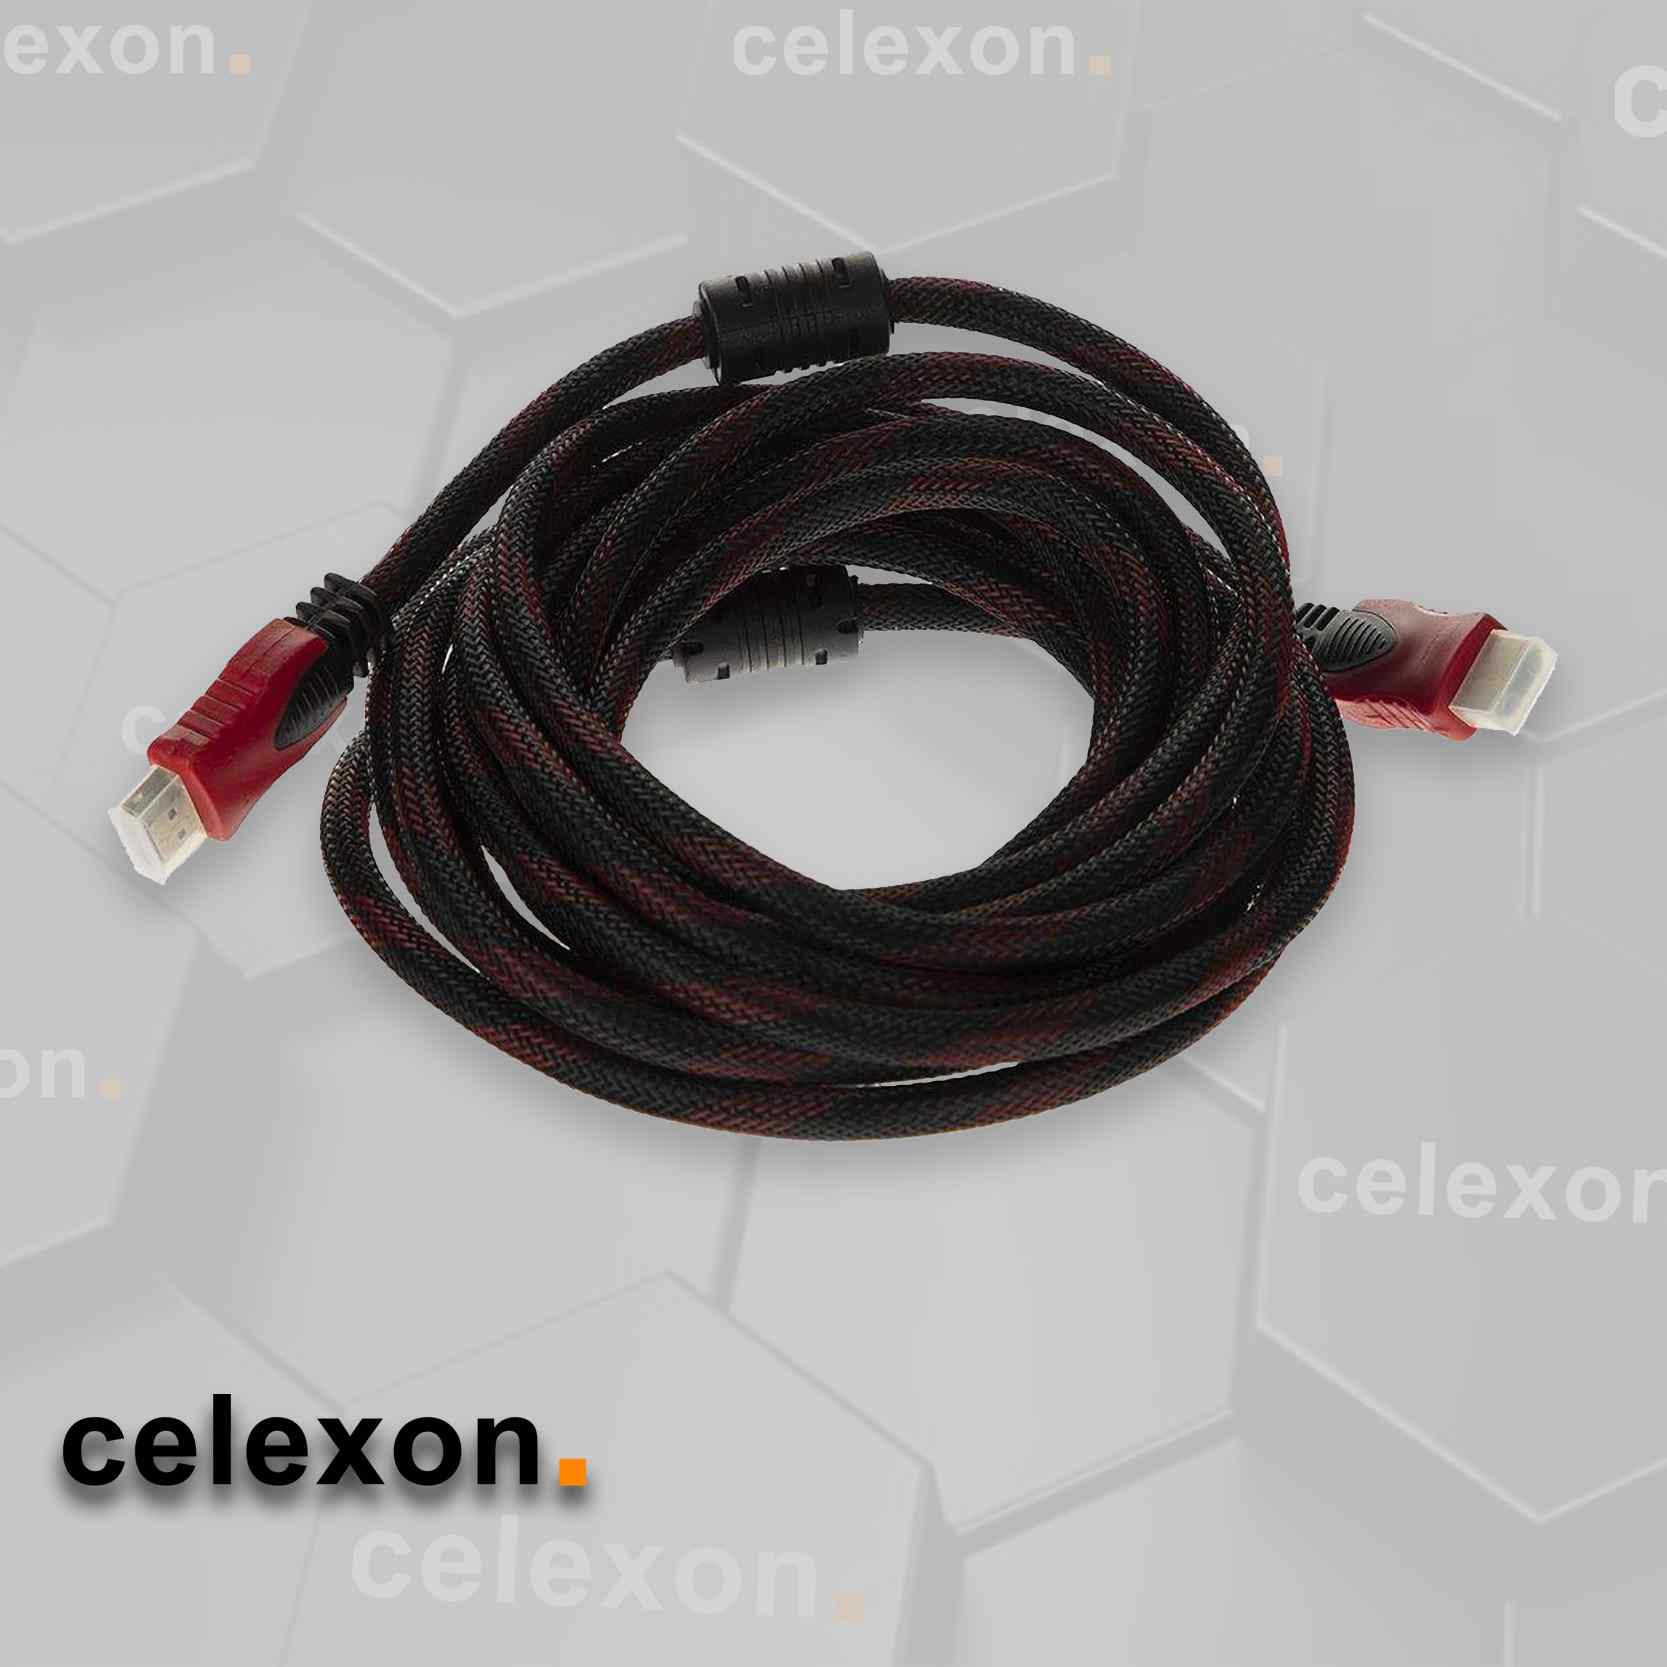 CC05 HDMI Cable Model CC05